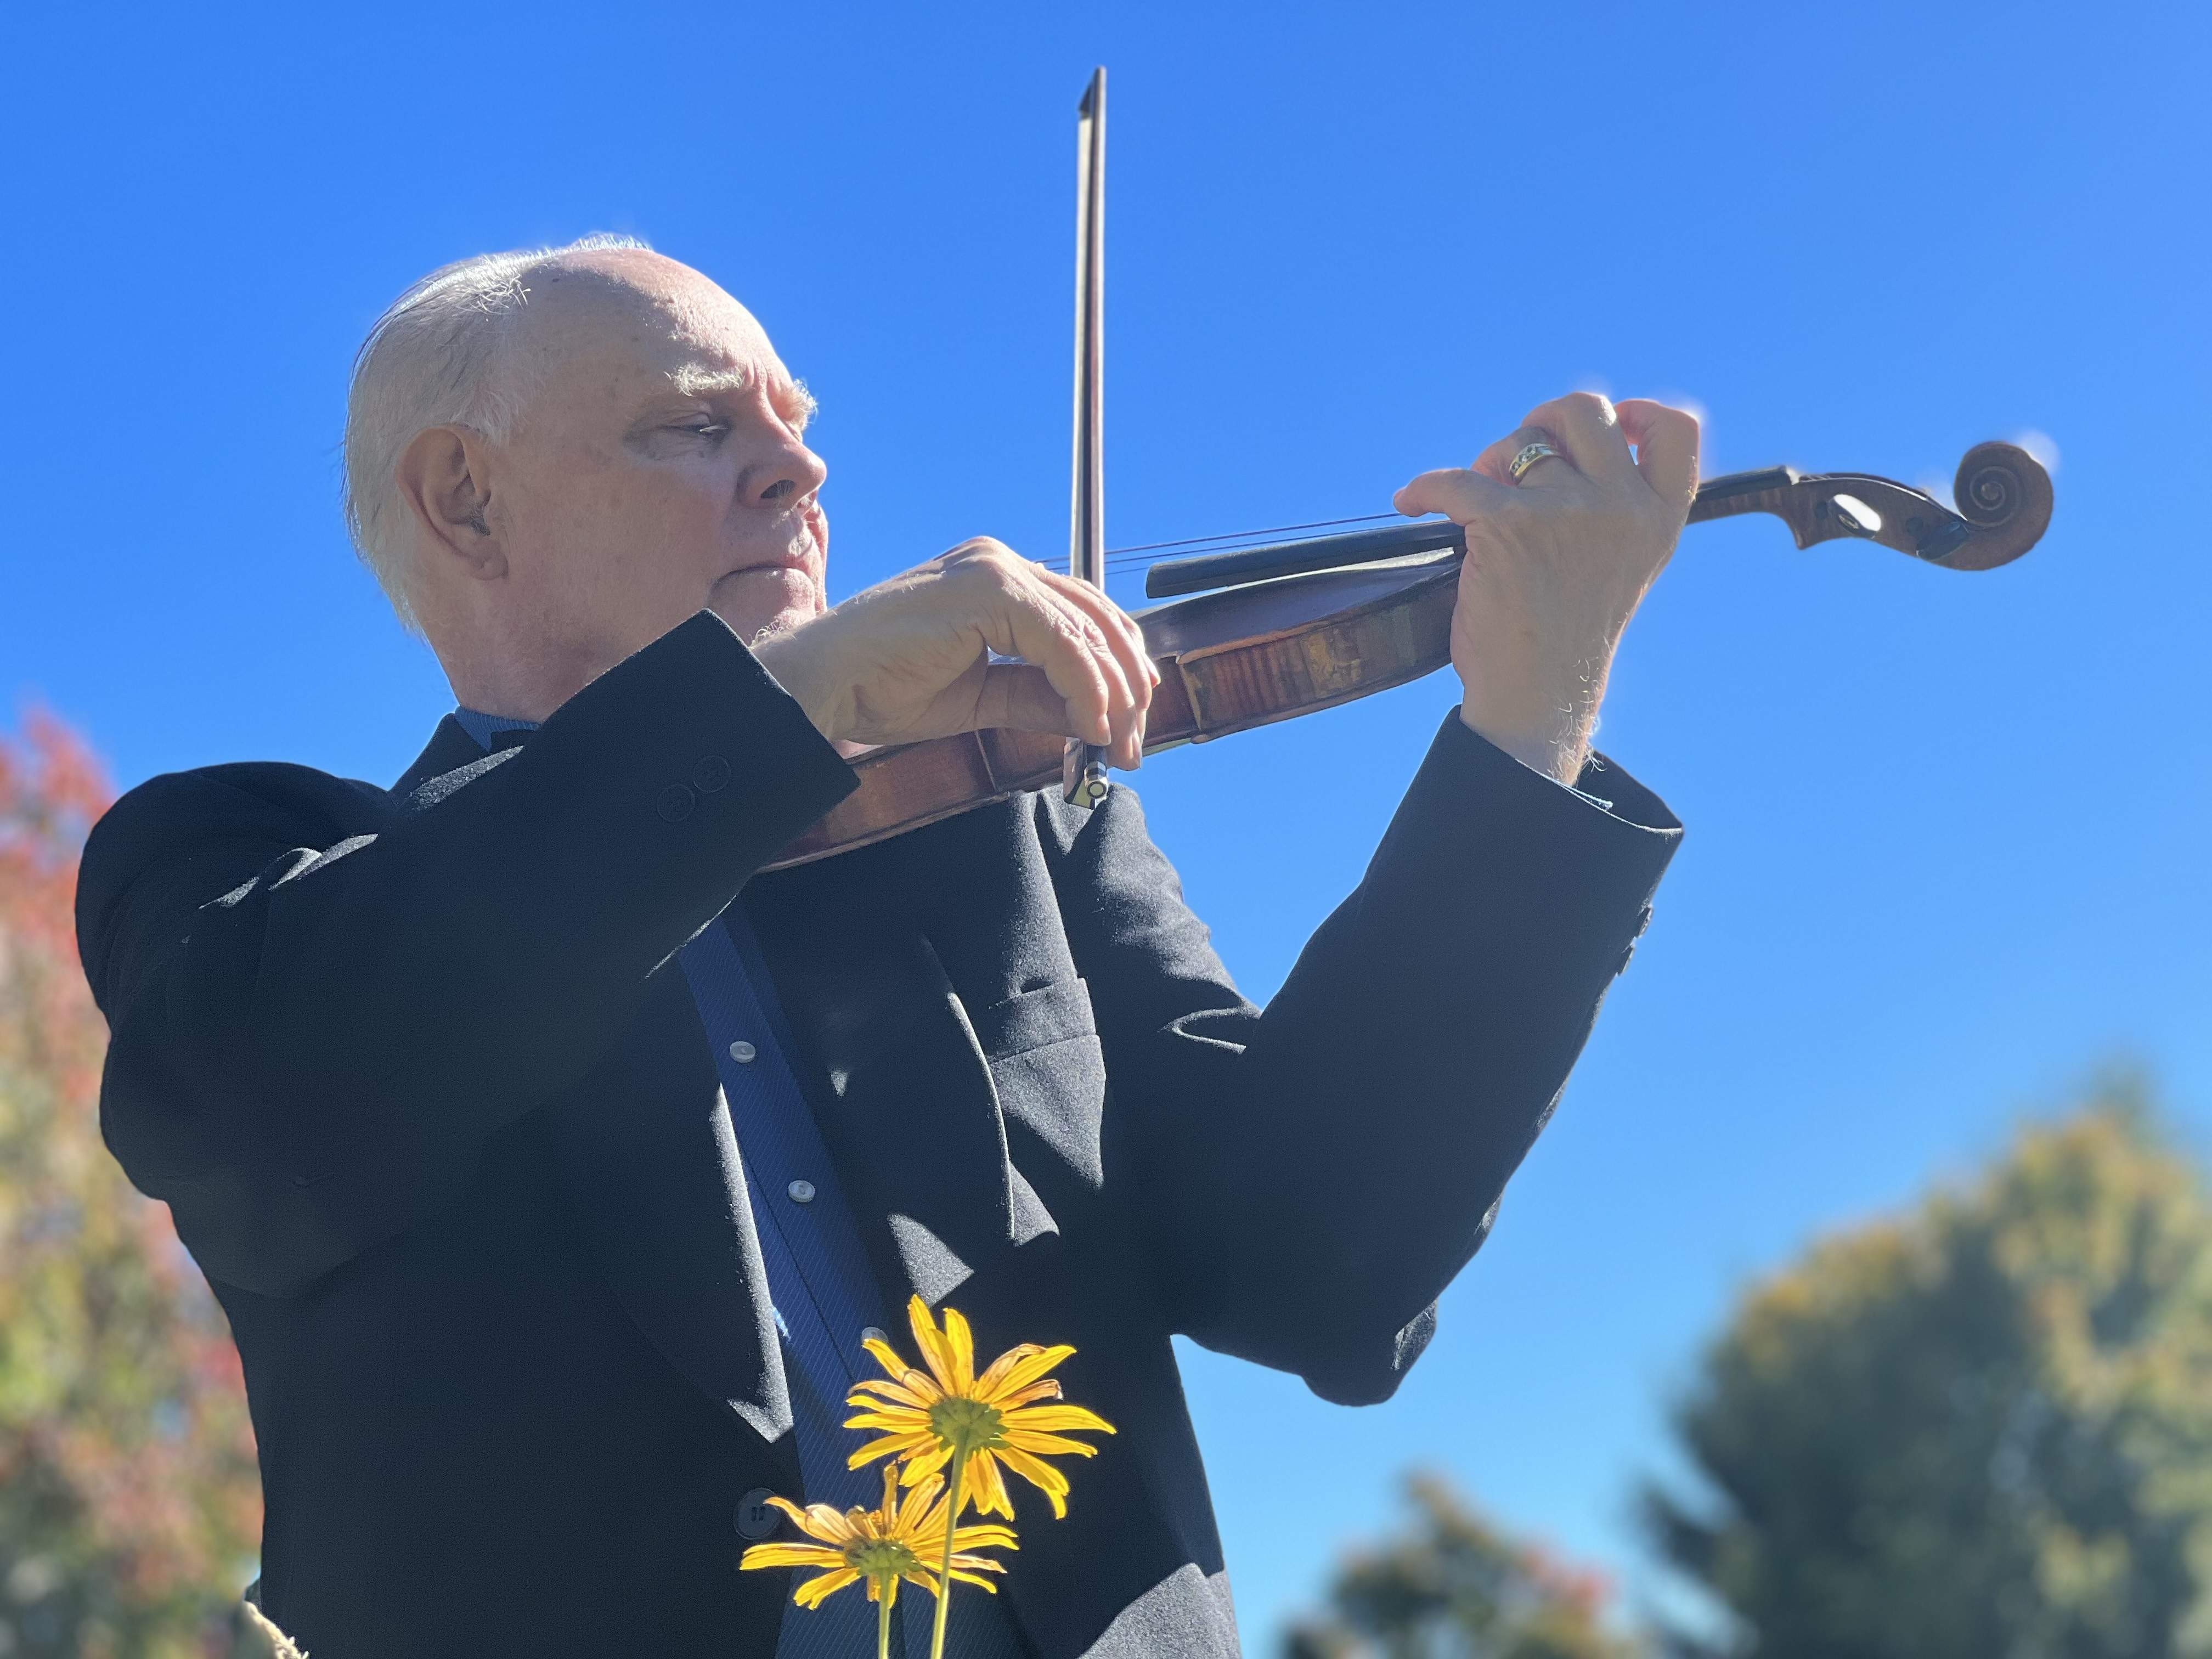 Concertmaster John Lindsay playing violin under a blue sky. Photo by Amornrat Lindsey